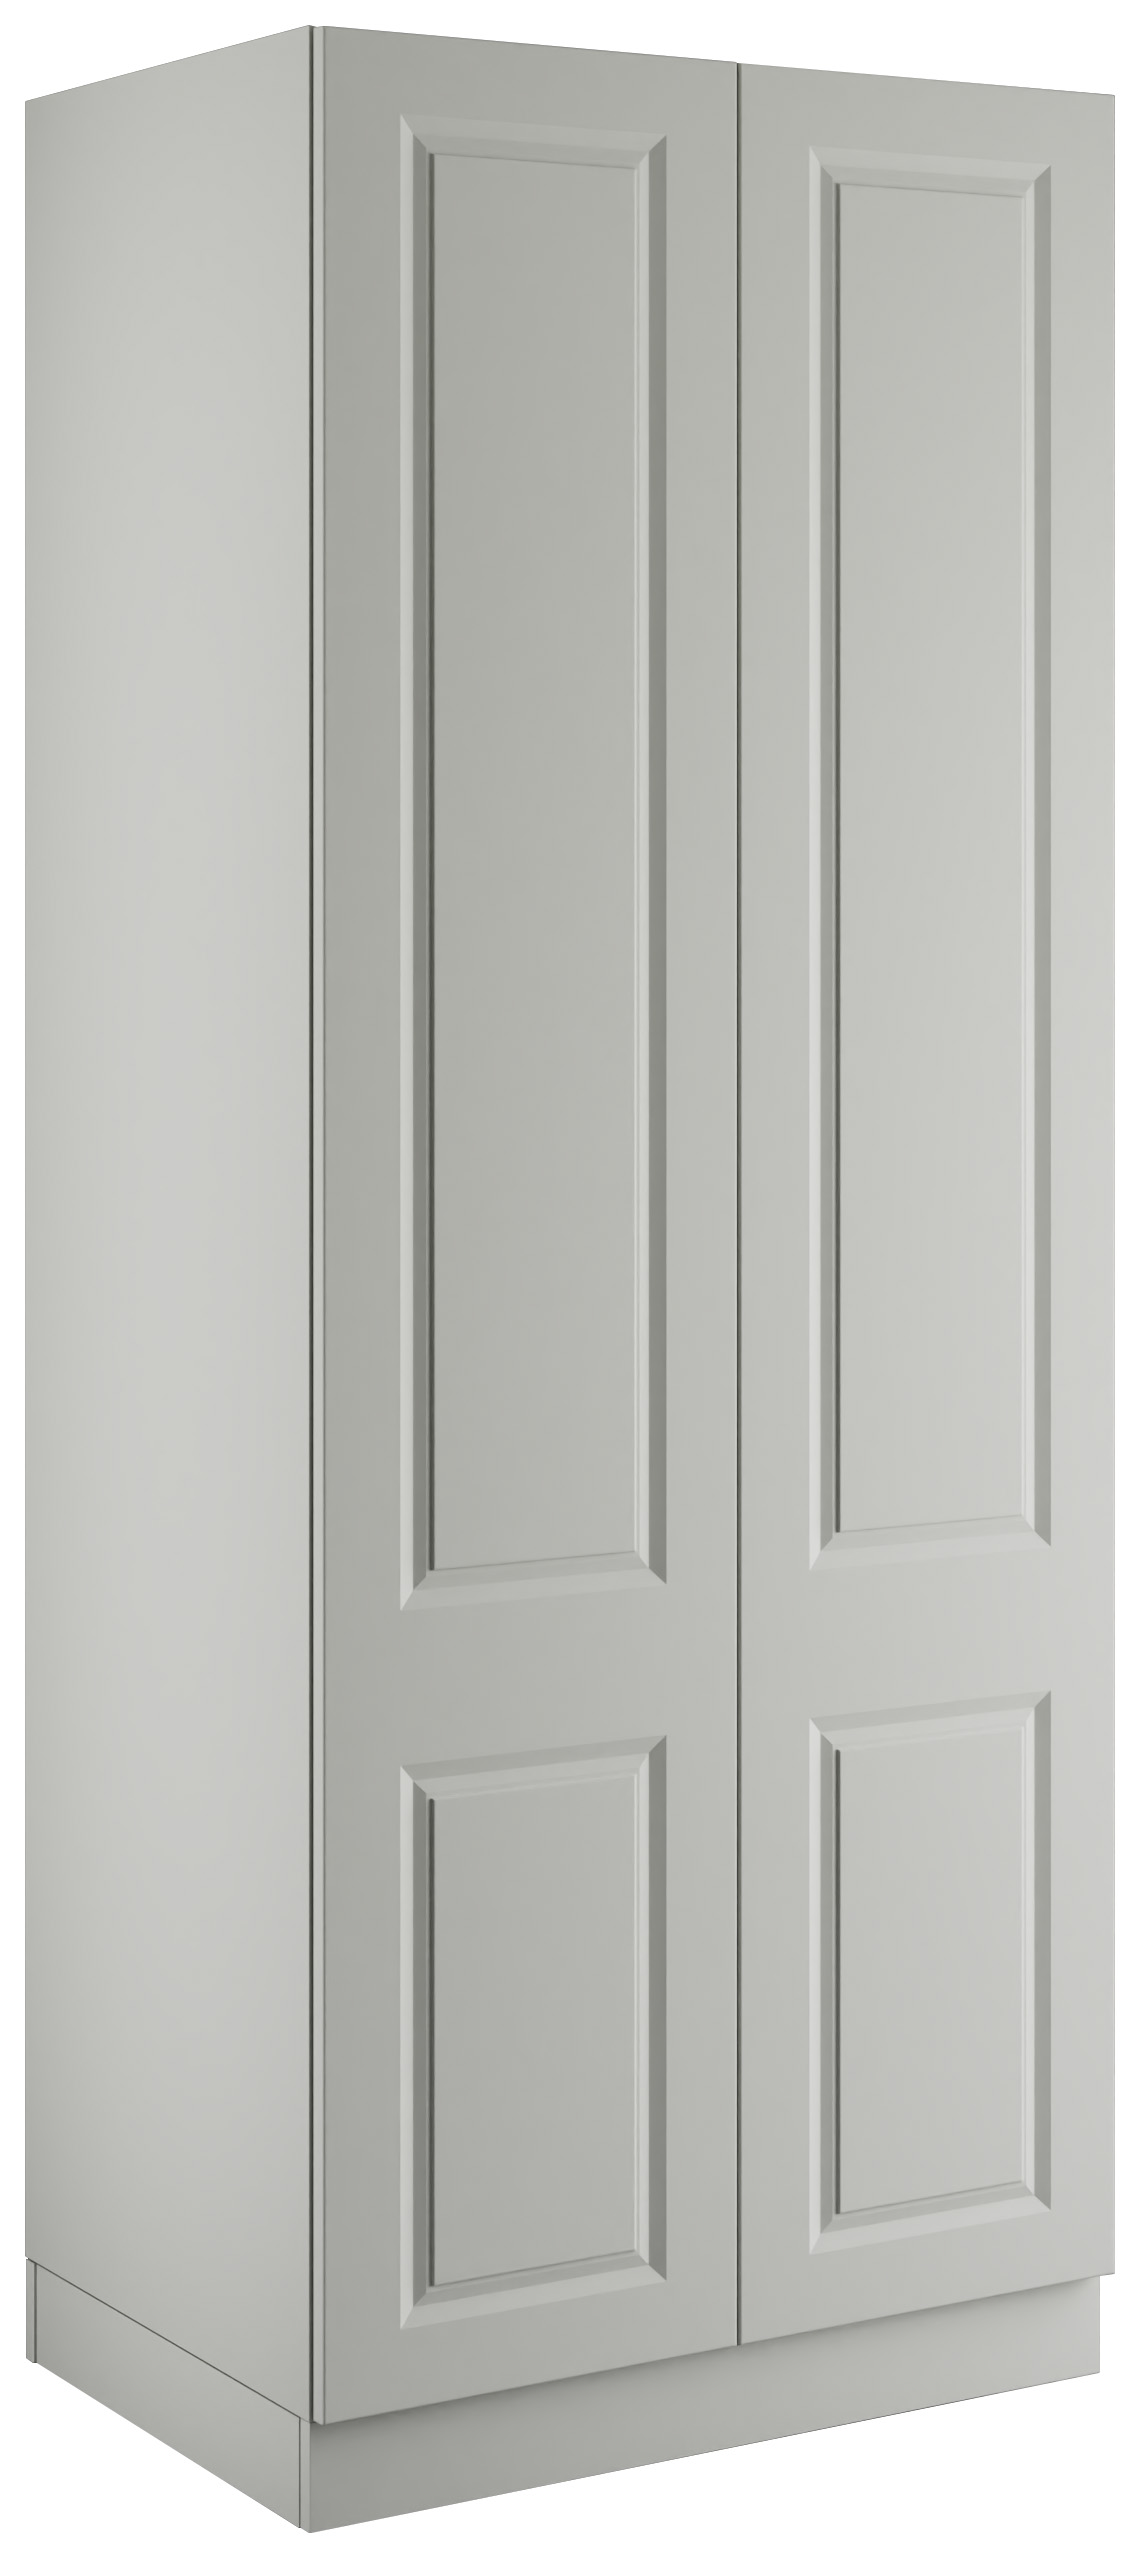 Harrogate Light Grey Double Wardrobe with Single Rail & Shelves - 900 x 2260 x 608mm